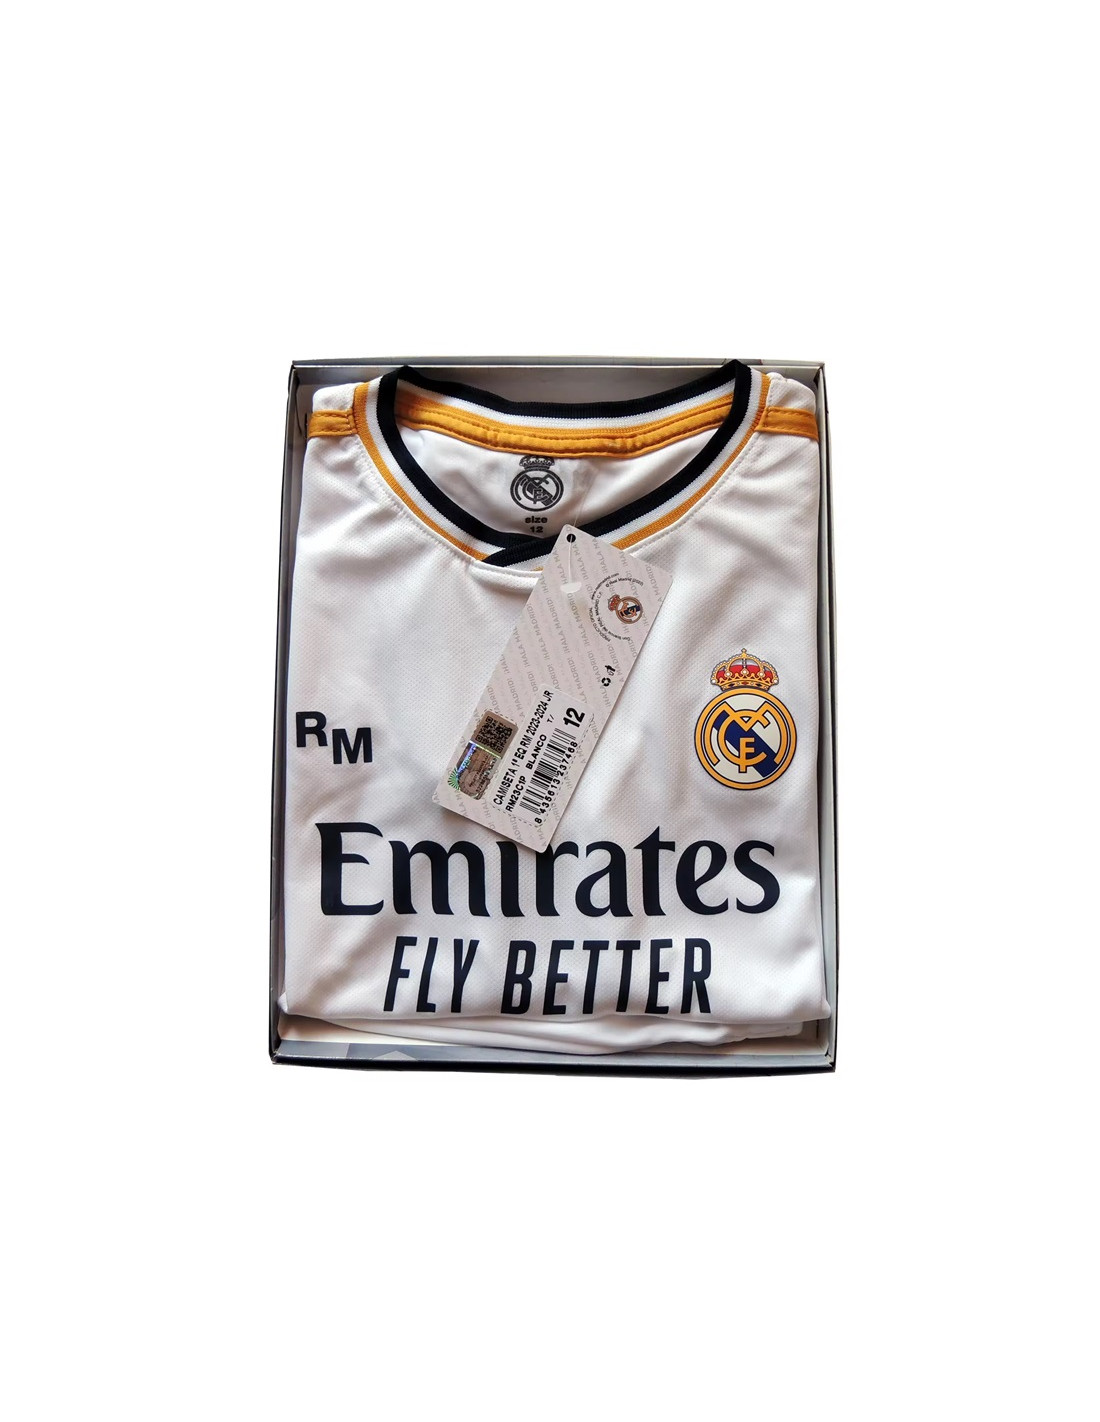 Réplica Oficial camiseta 1ª equipación Real Madrid 23/24 - Adulto